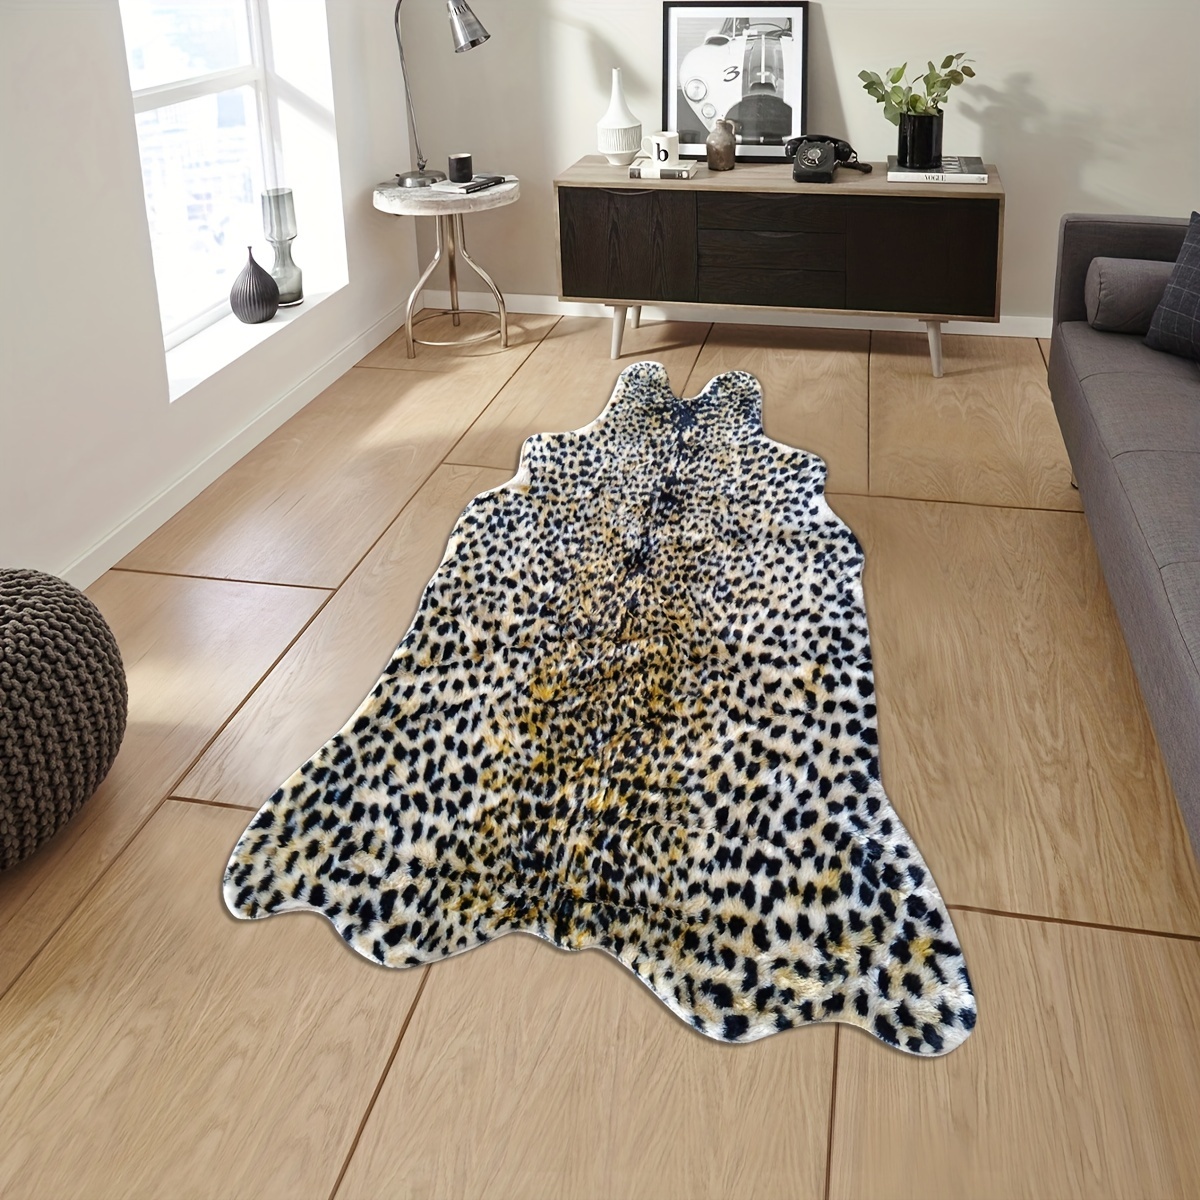 Leopard print animal print carpet